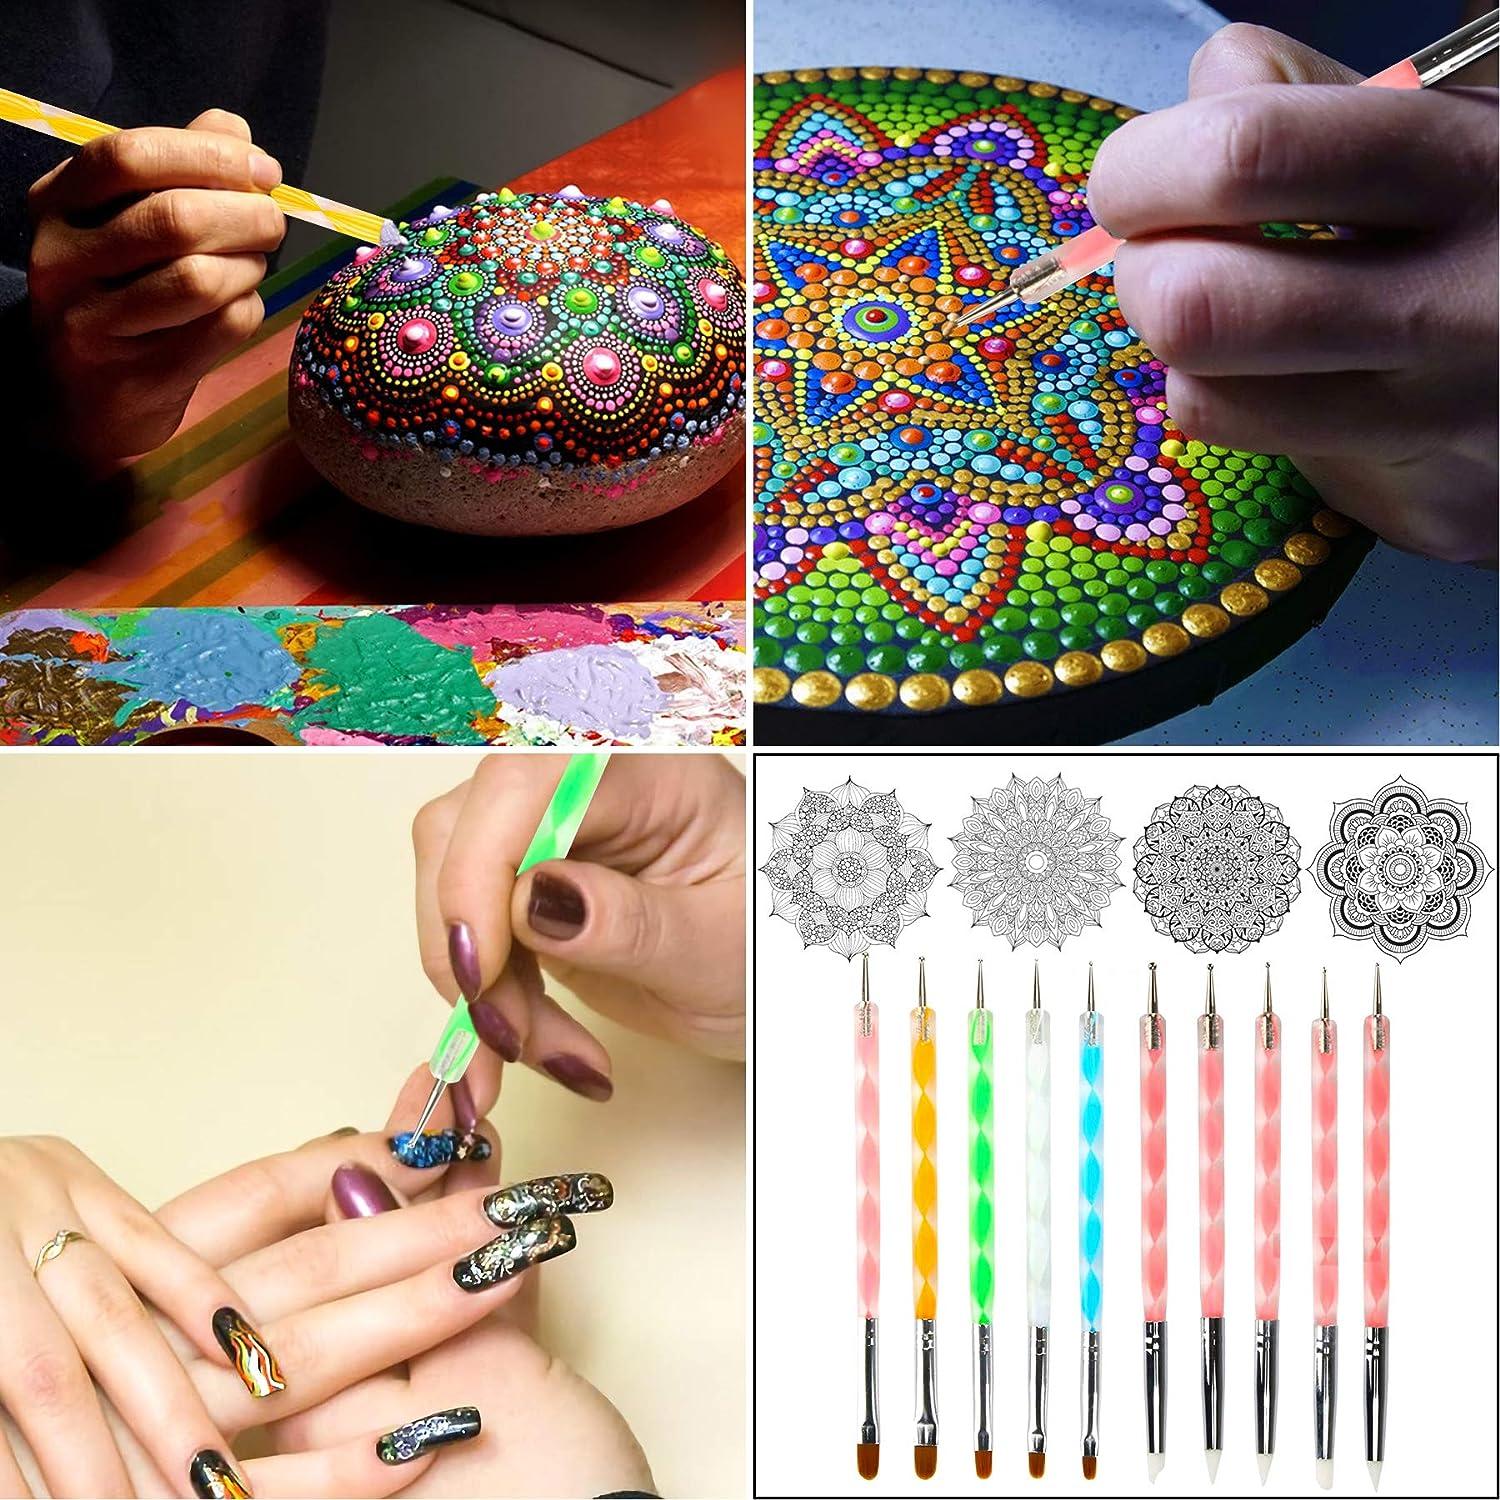 Dot Mandala Painting Kit - Dotting Tools and Stencils for Dot